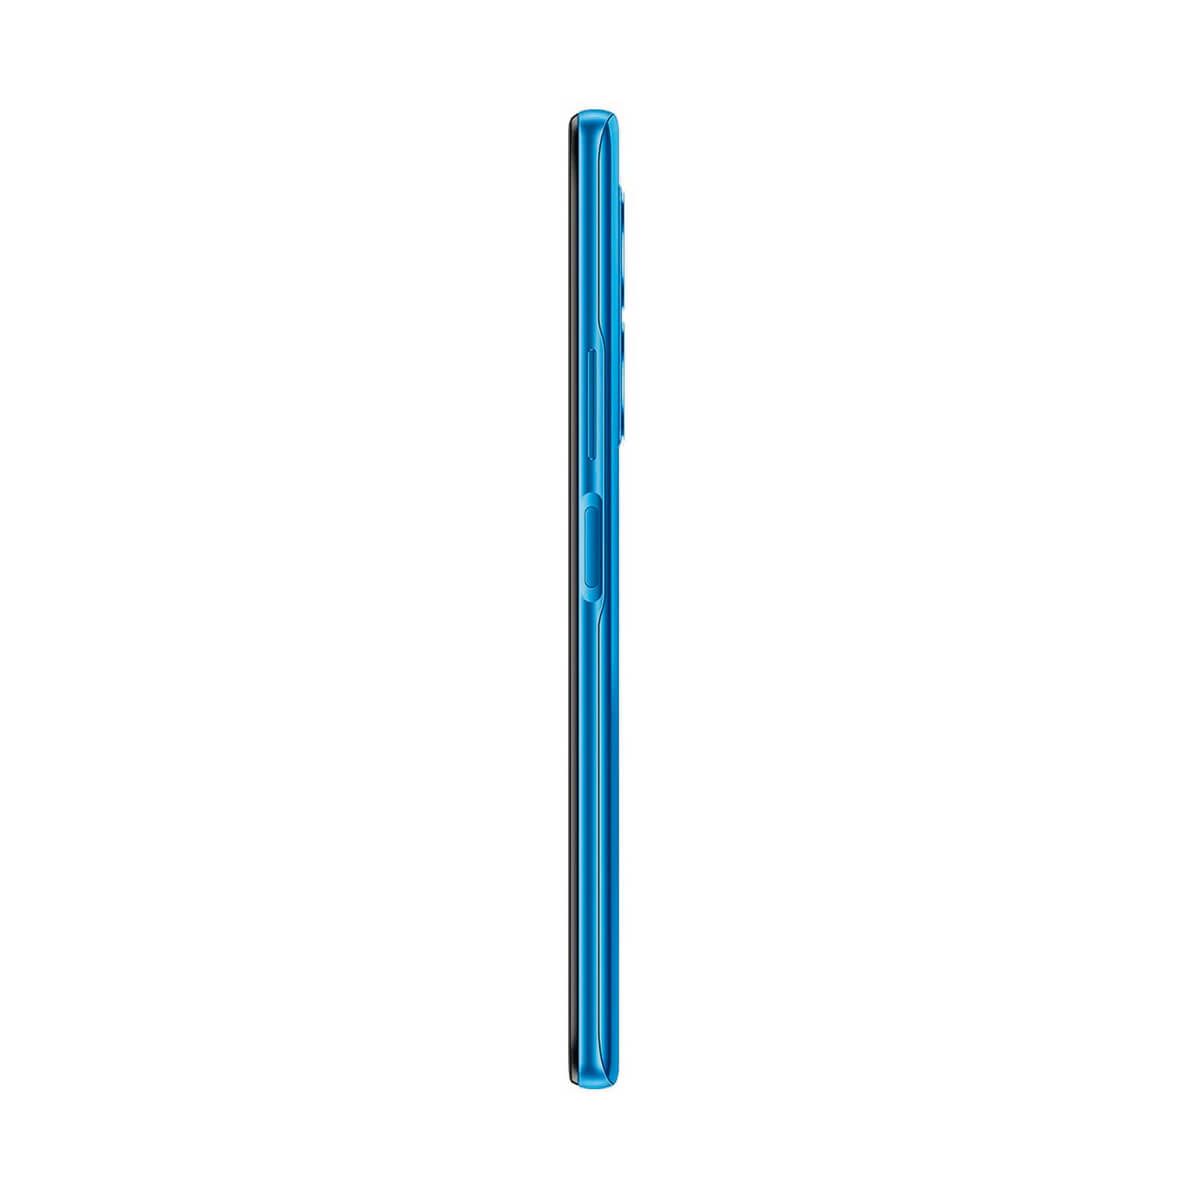 Honor X7 4G 4Go/128Go Bleu (Bleu Océan) Double SIM